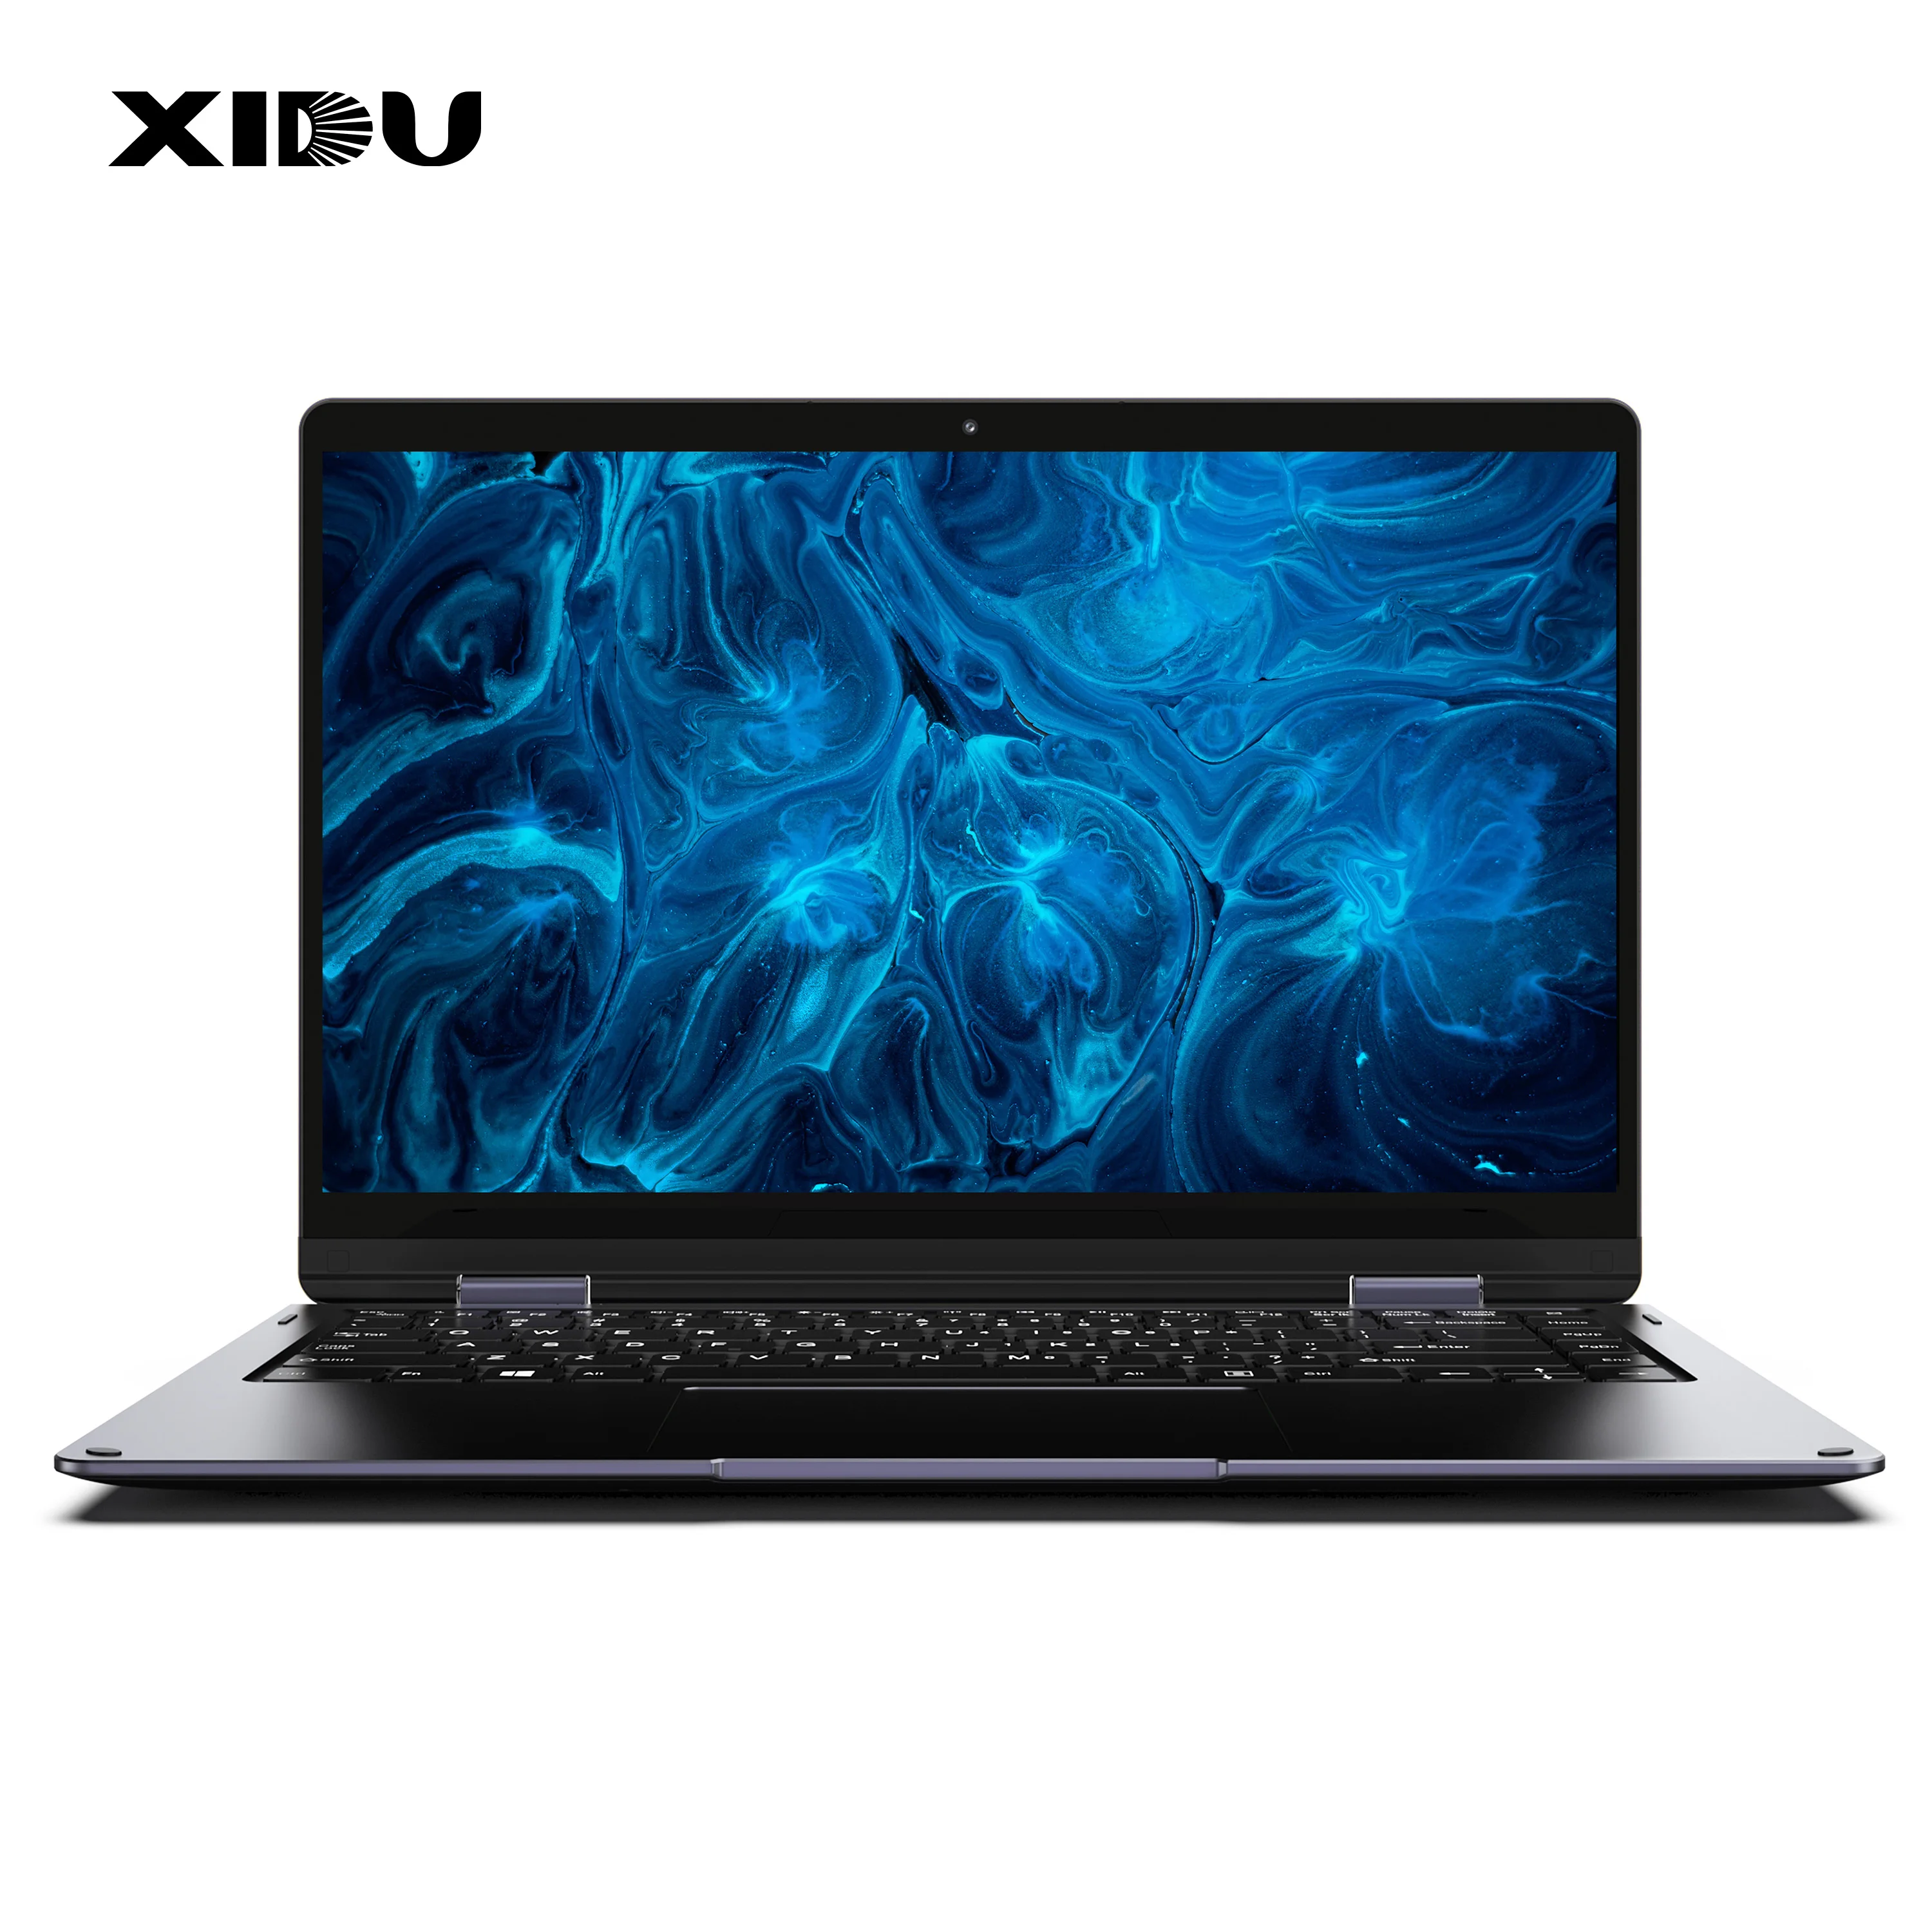 

XIDU PhilBook Max 14.1 Inch 8GB RAM 128G SSD Intel 360 Degree Flip Touchscreen Gamer Gaming Laptop, Space grey